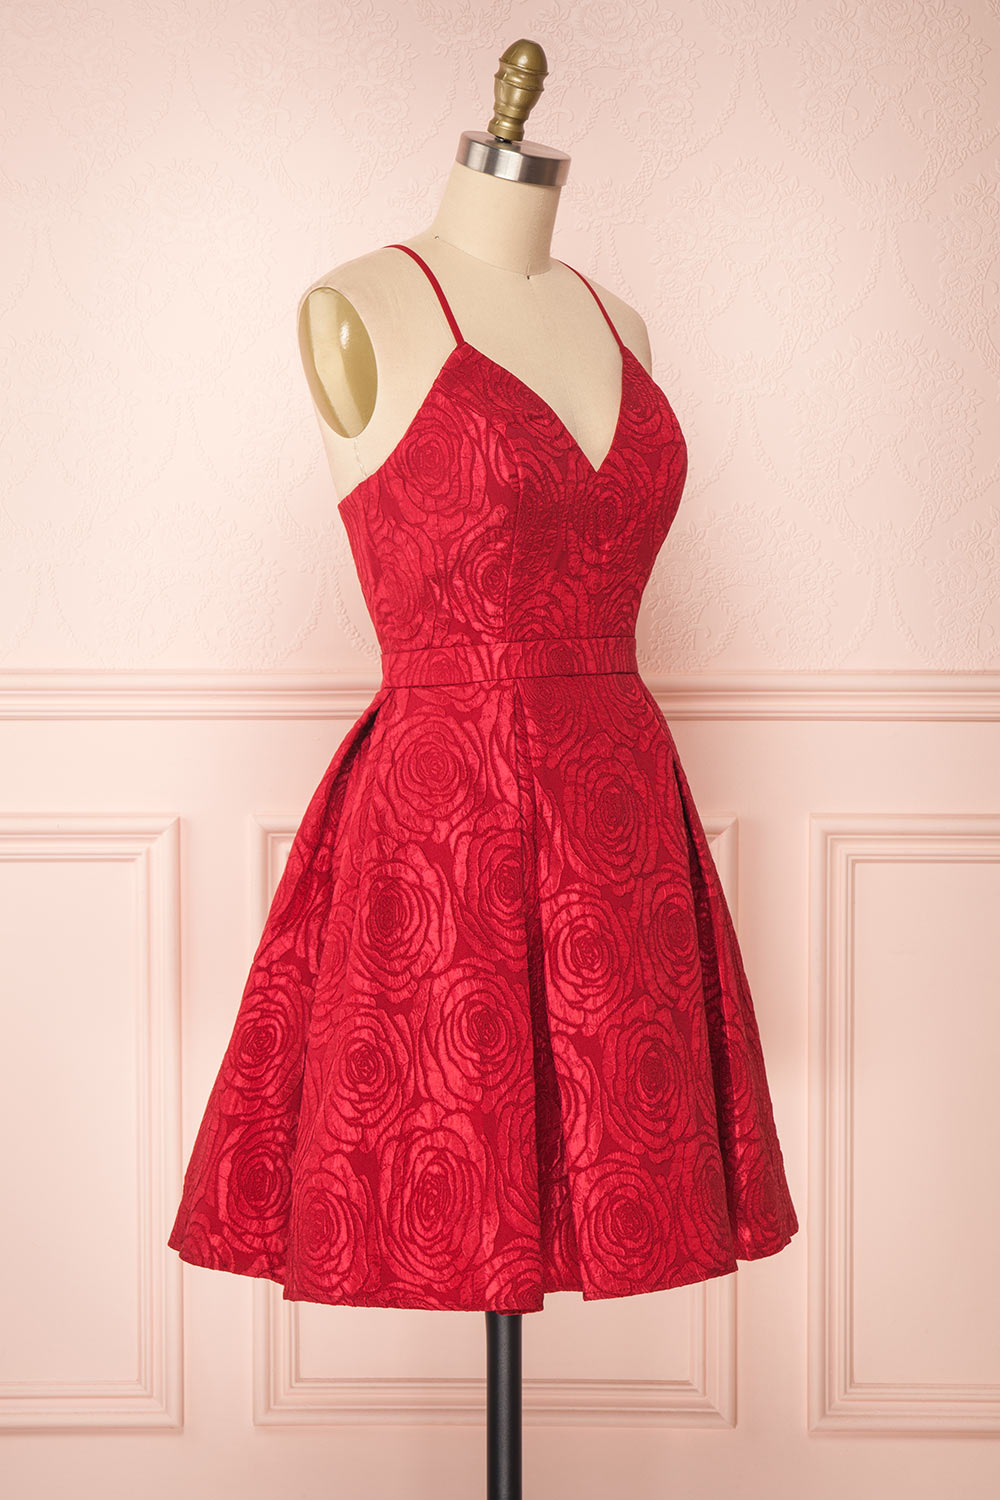 Georgina Red A-Line Cocktail Dress side view | Boutique 1861 